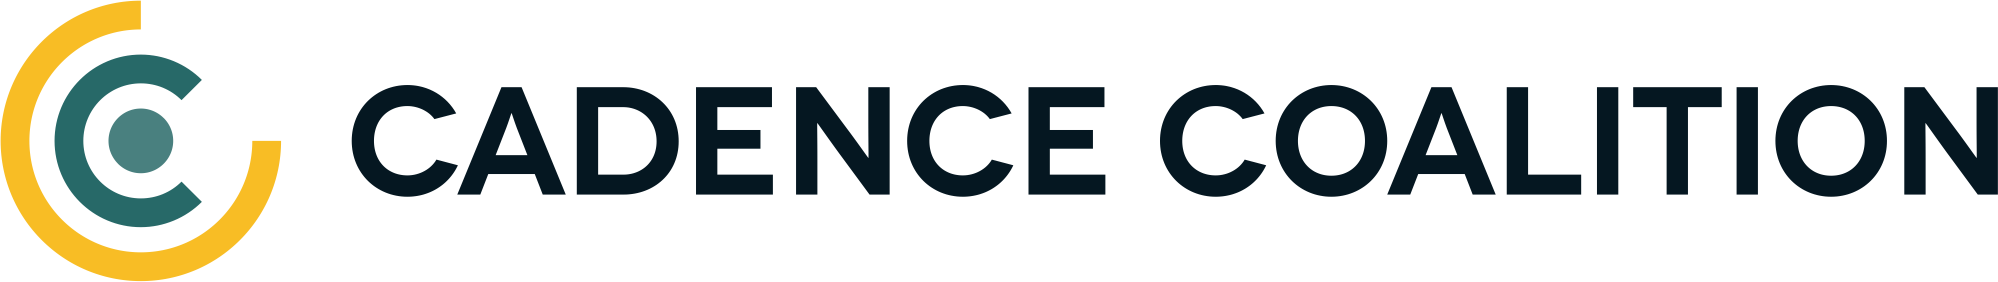 Cadence Coalition logo